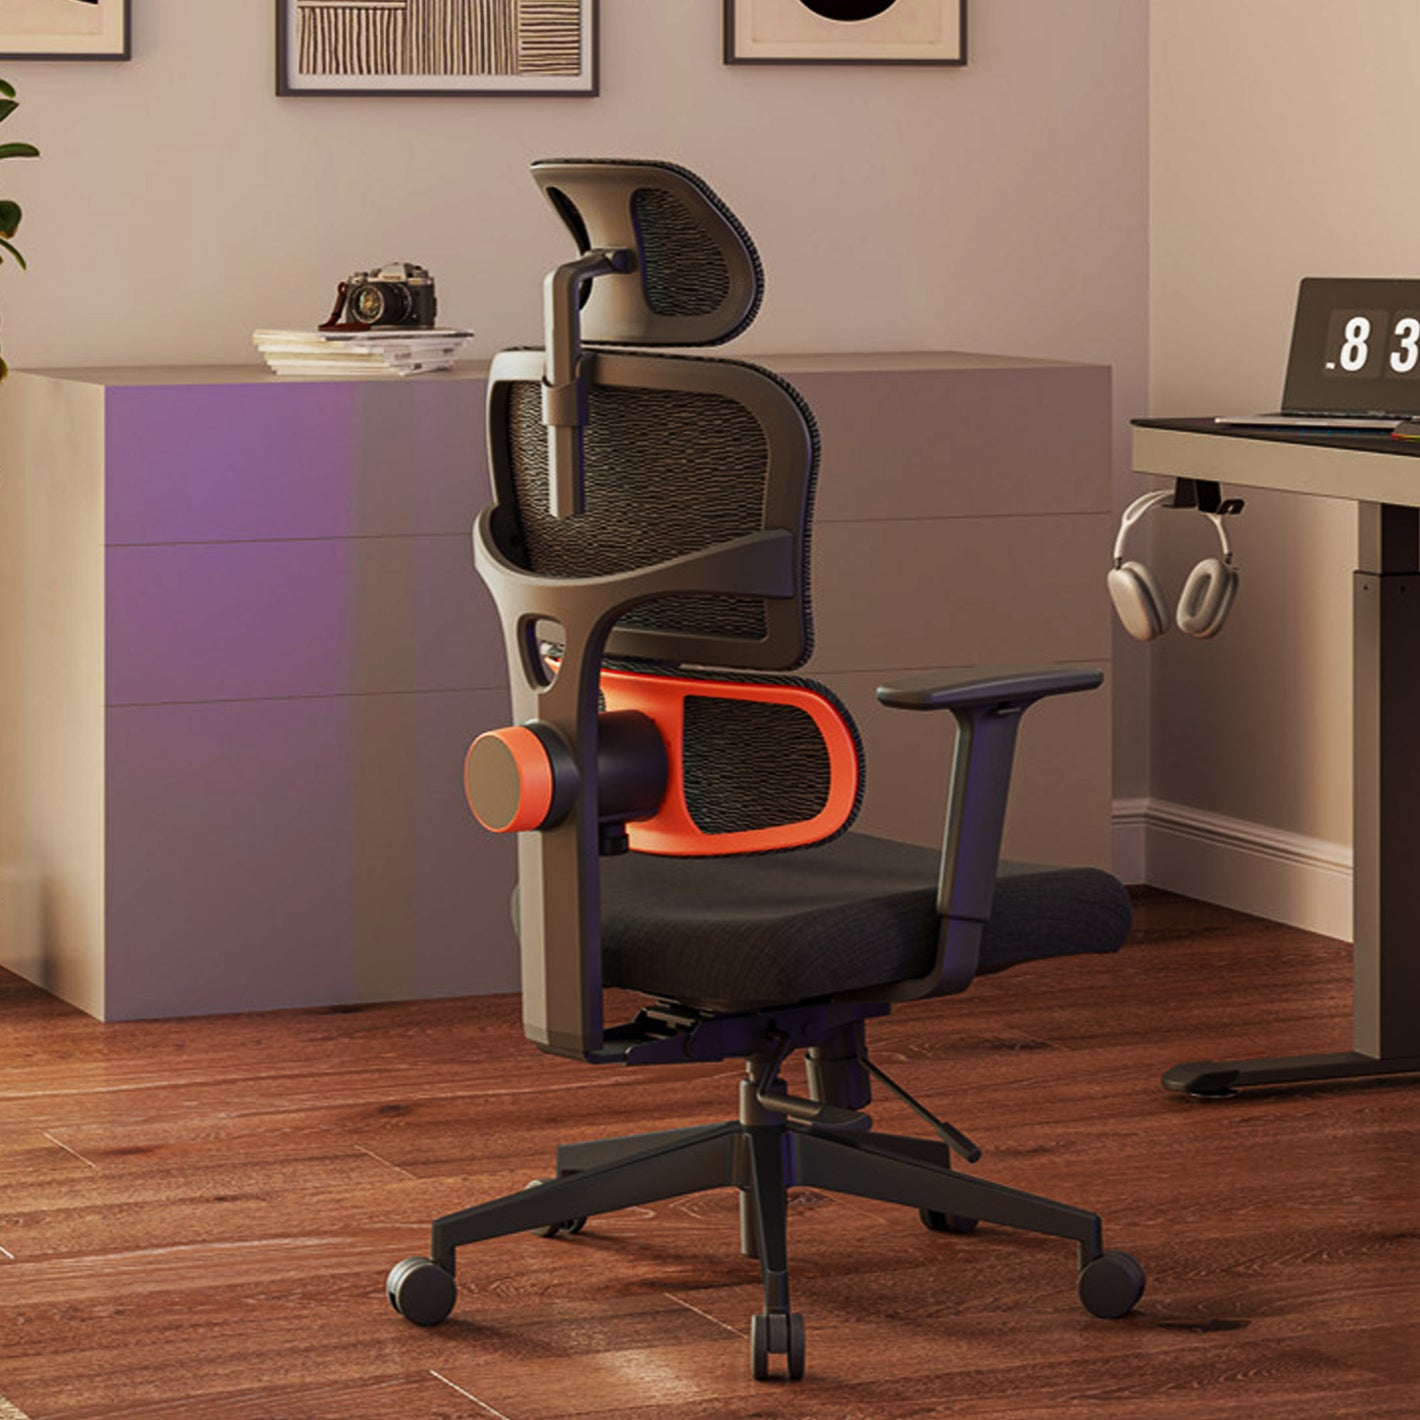 OC12 Office Chair,Dynamic self-adaptive lumbar support